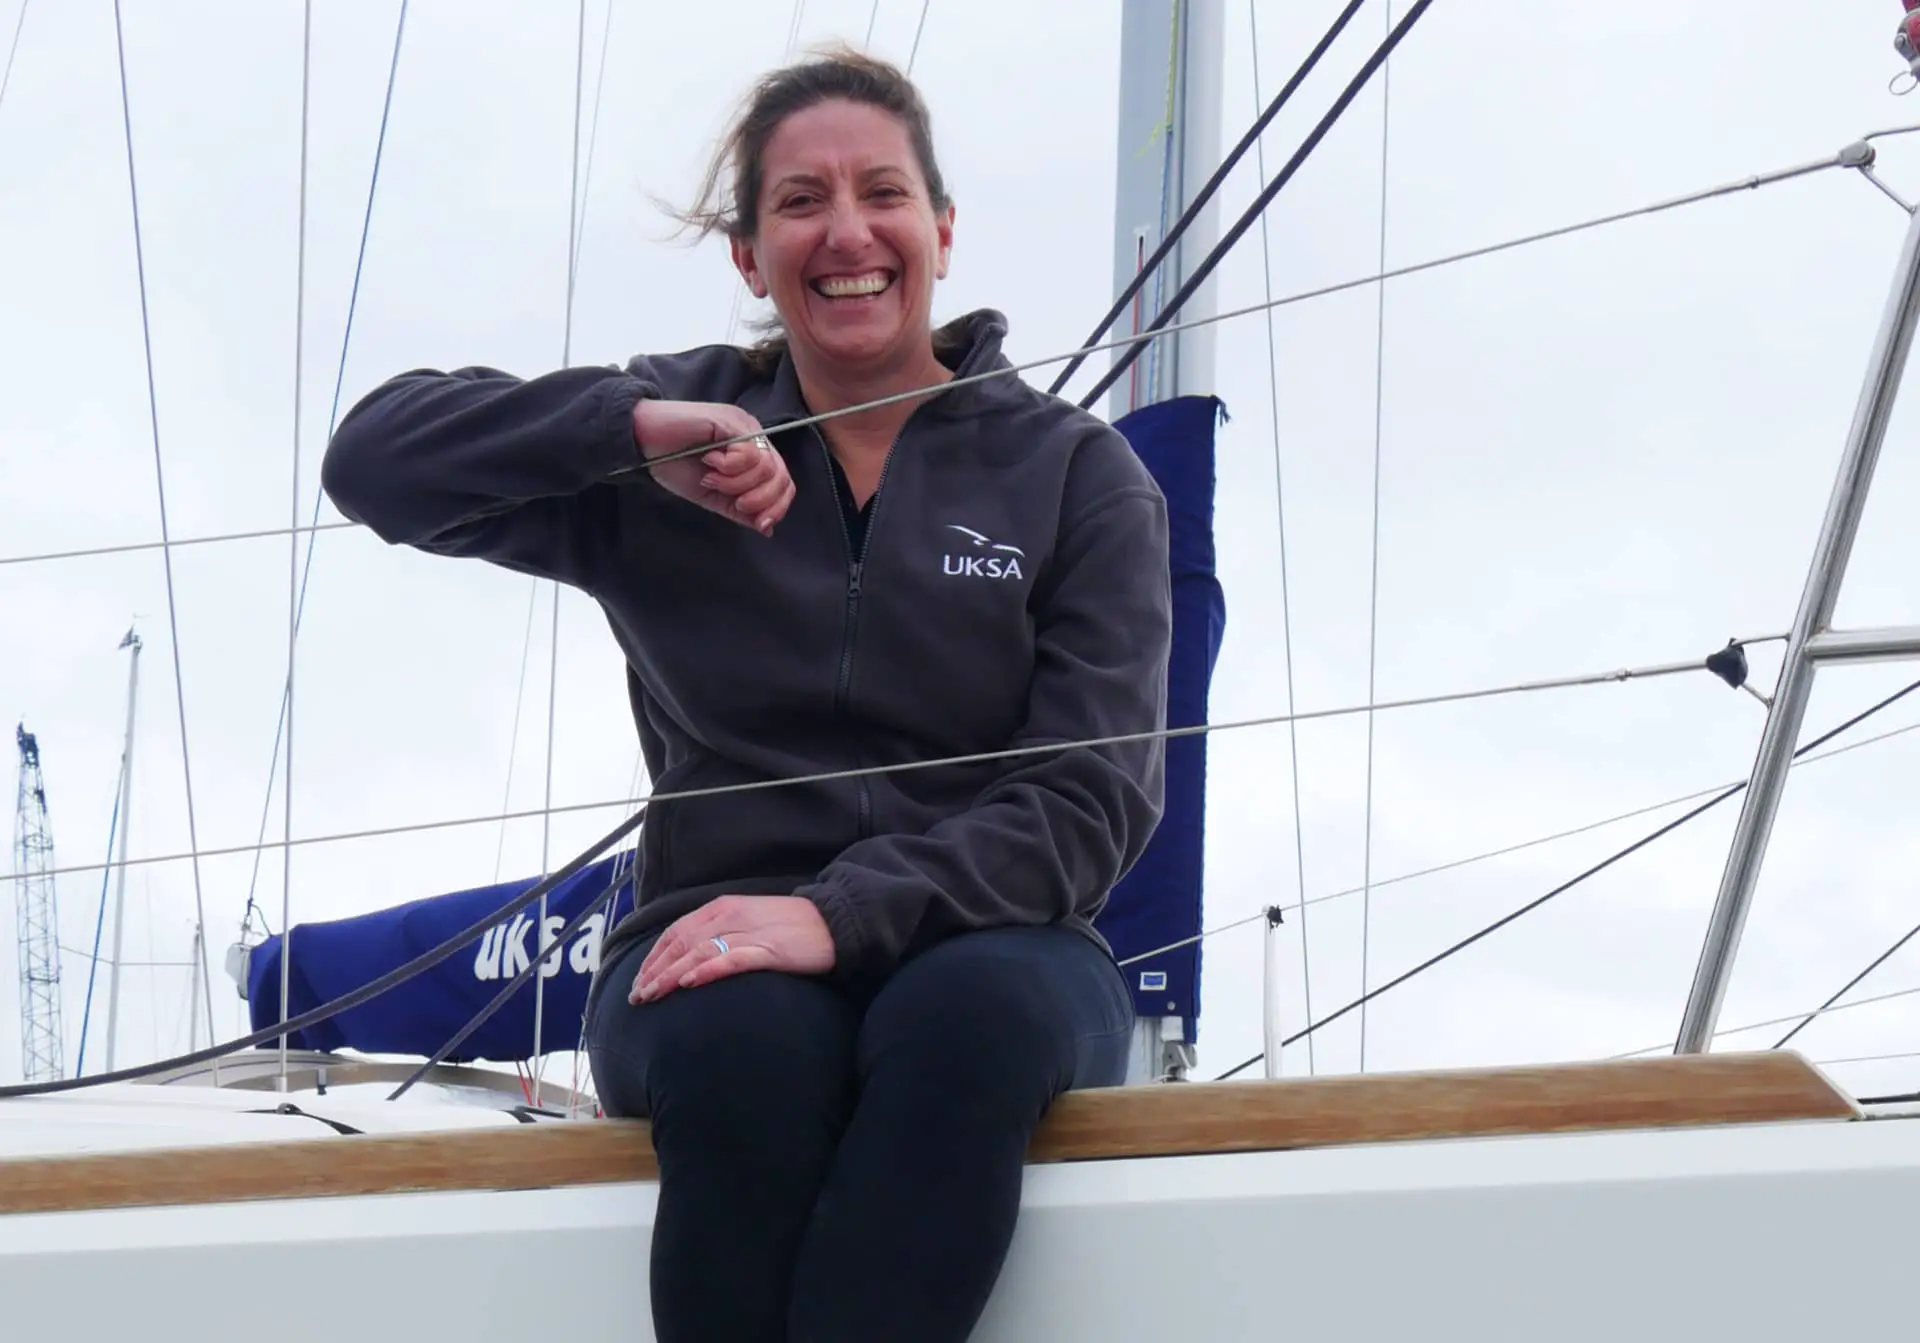 Dee Caffari on UKSA boat, smiling to the camera